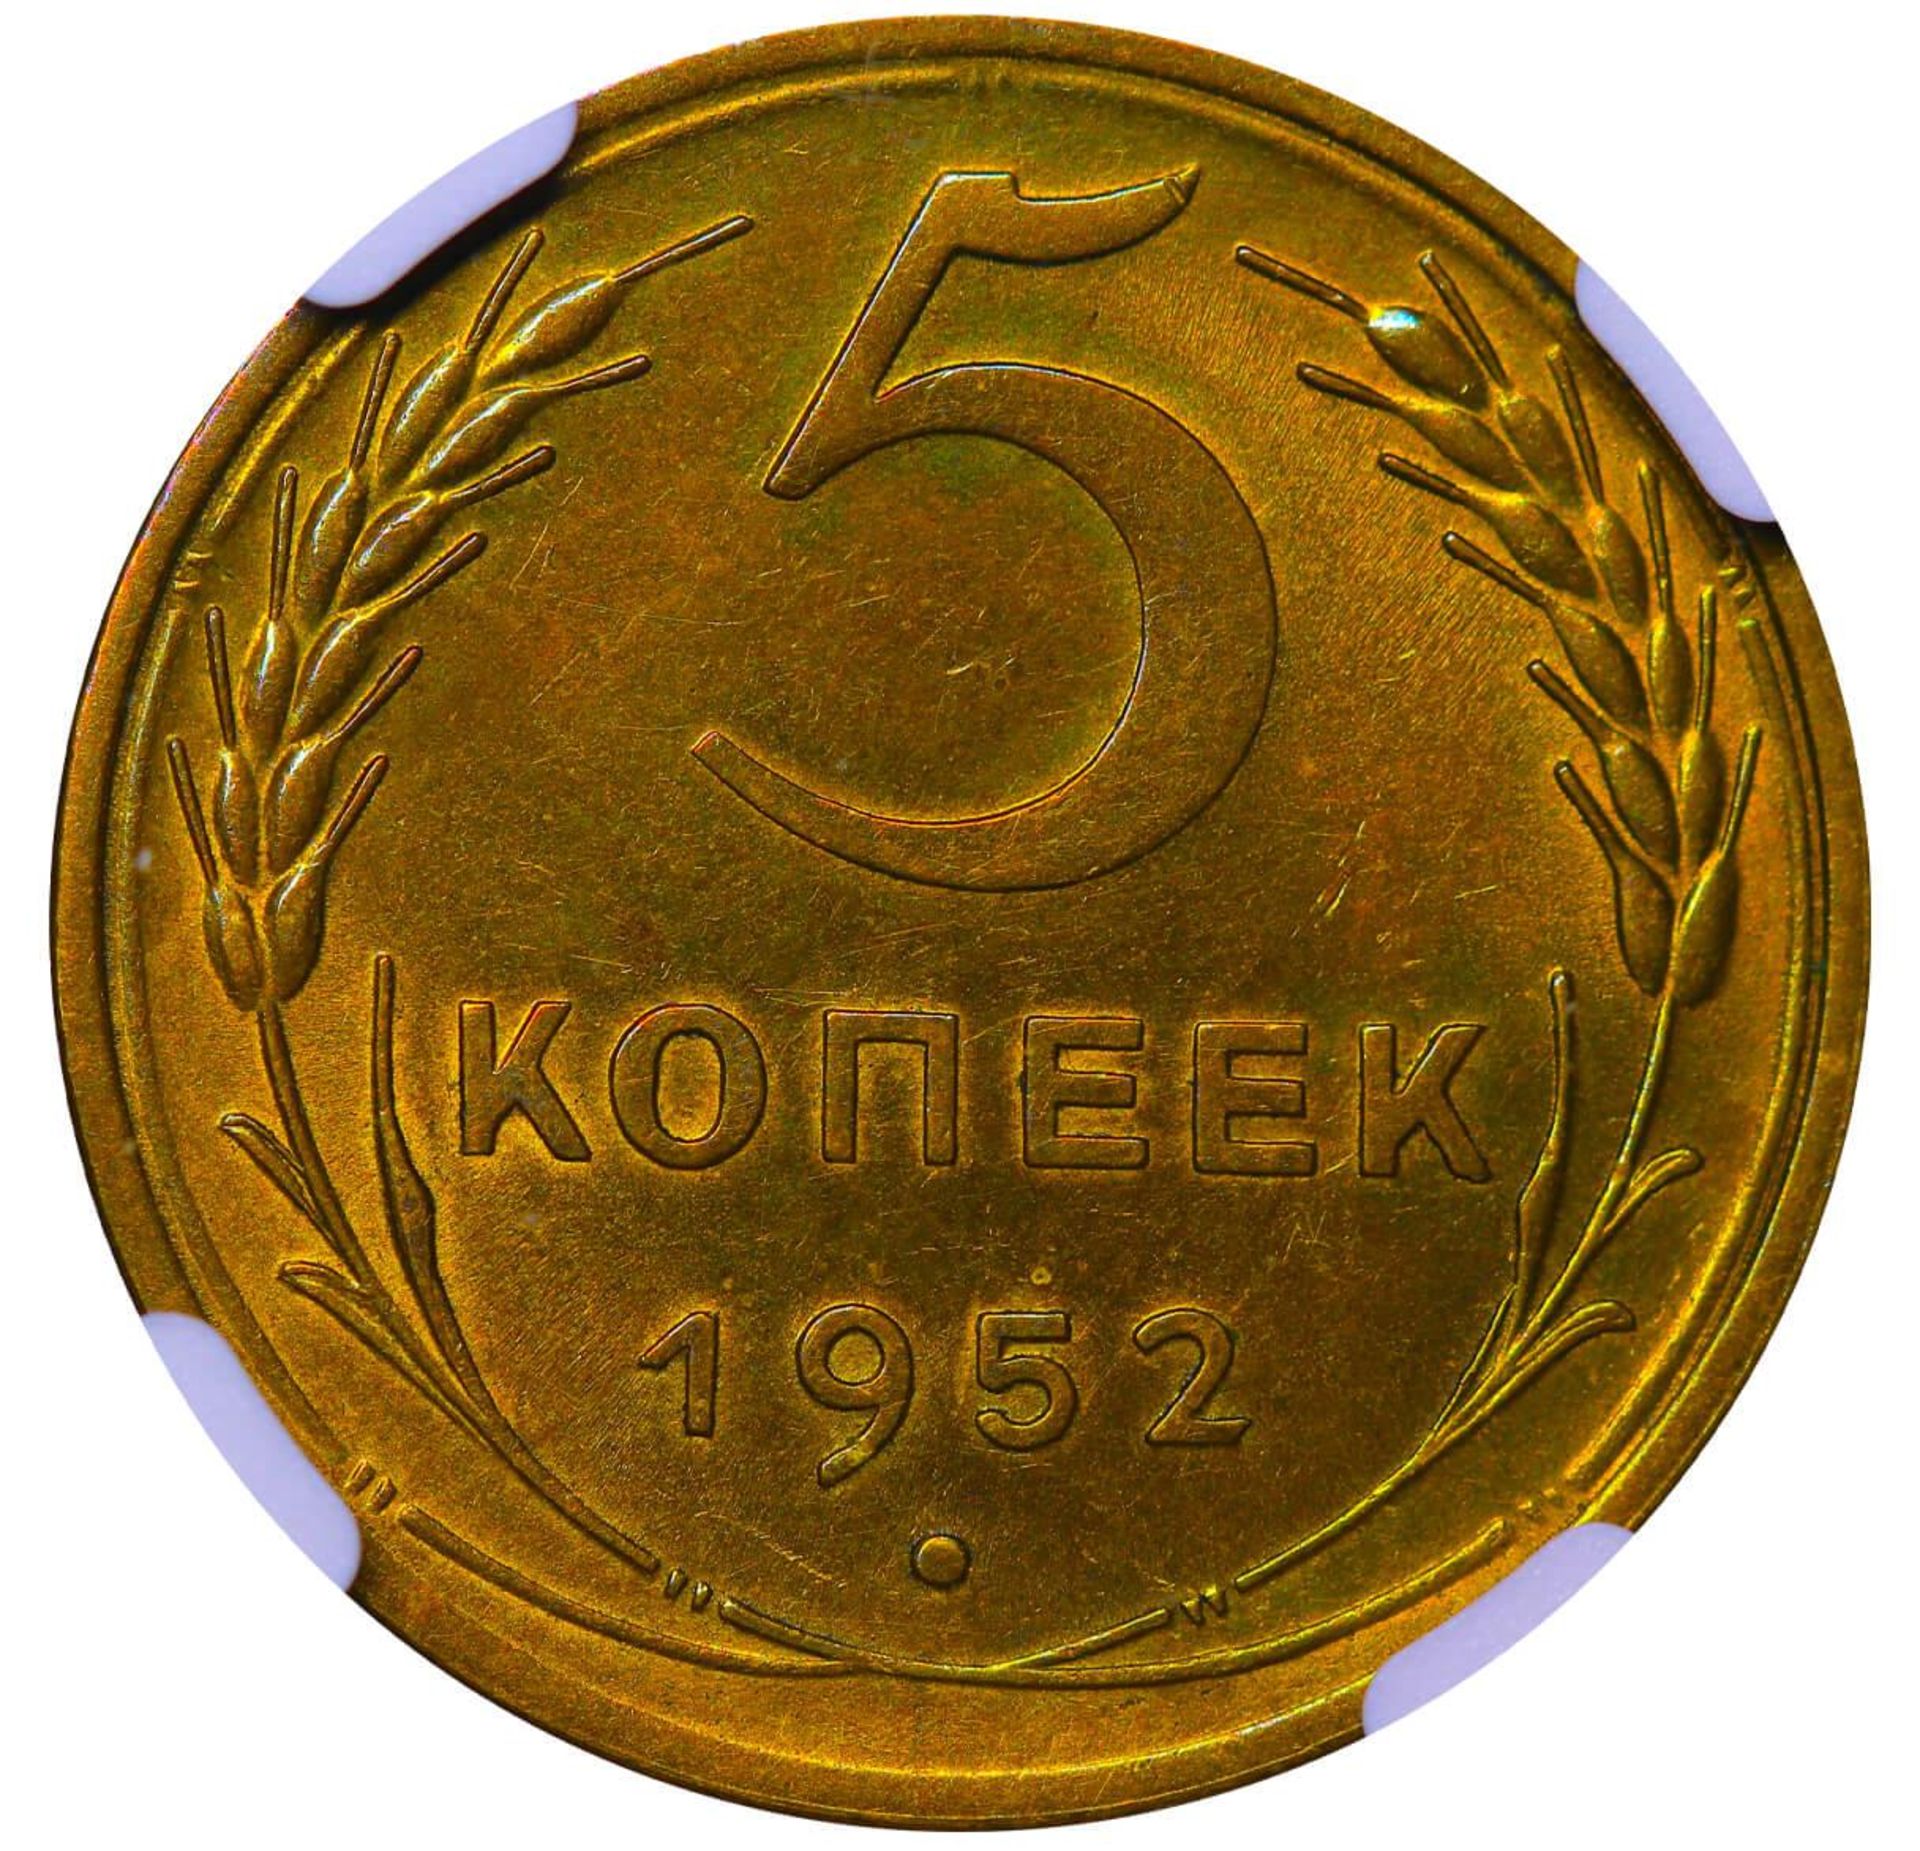 Soviet Union, 5 Kopecks, 1952 year, NGC, MS 62 - Image 3 of 3